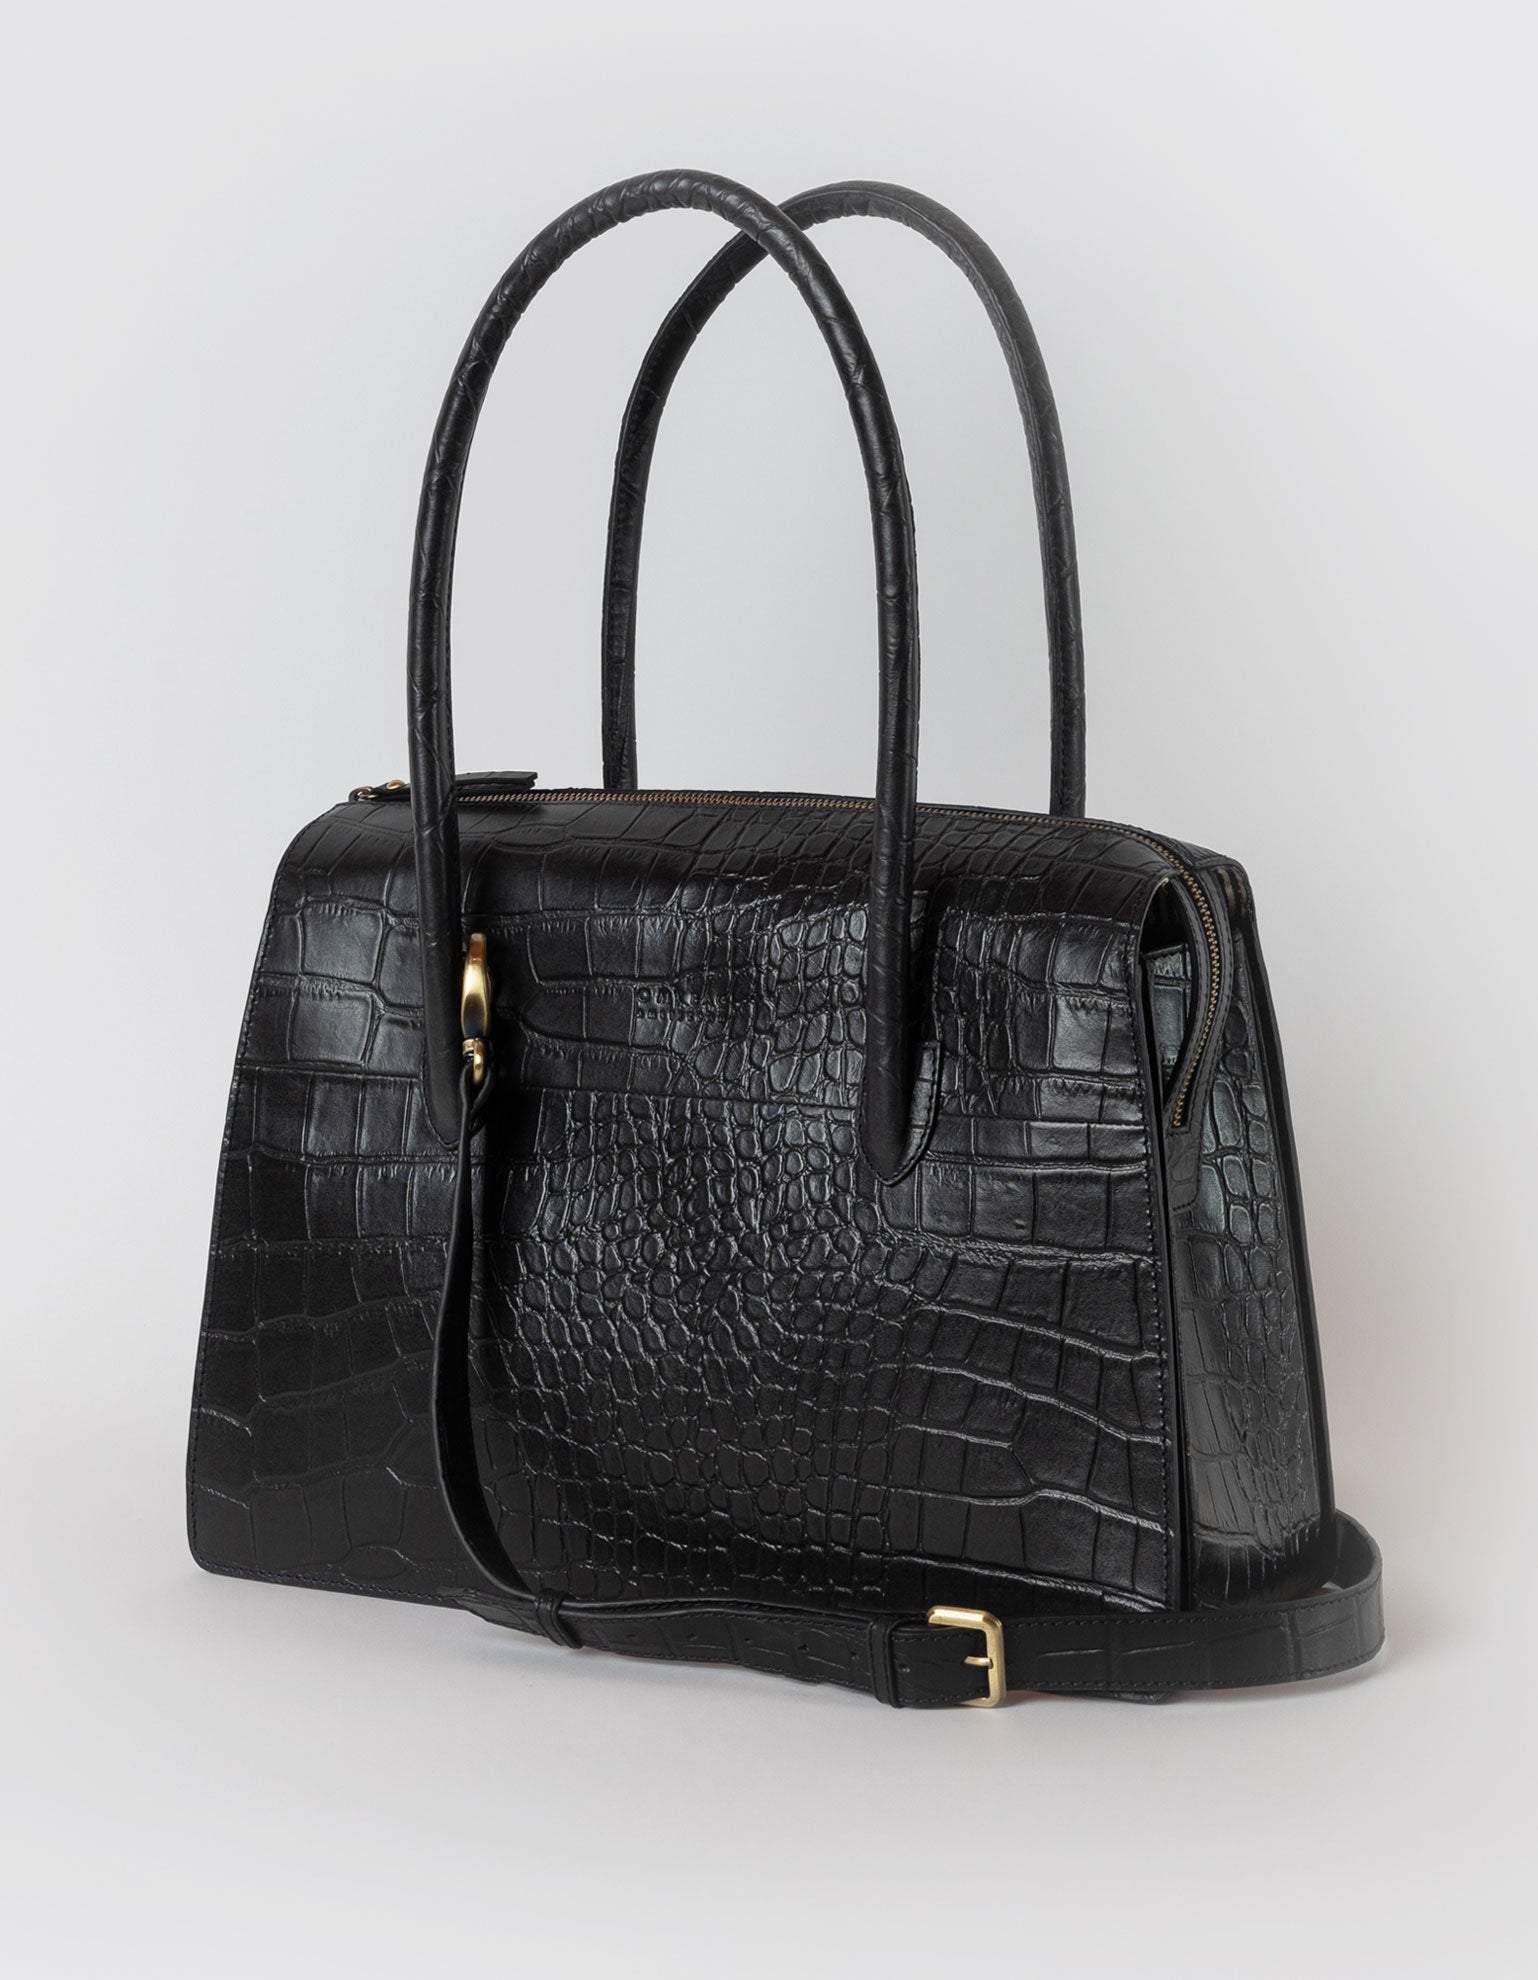 Kate Bag in Black Croco Print - Side product image